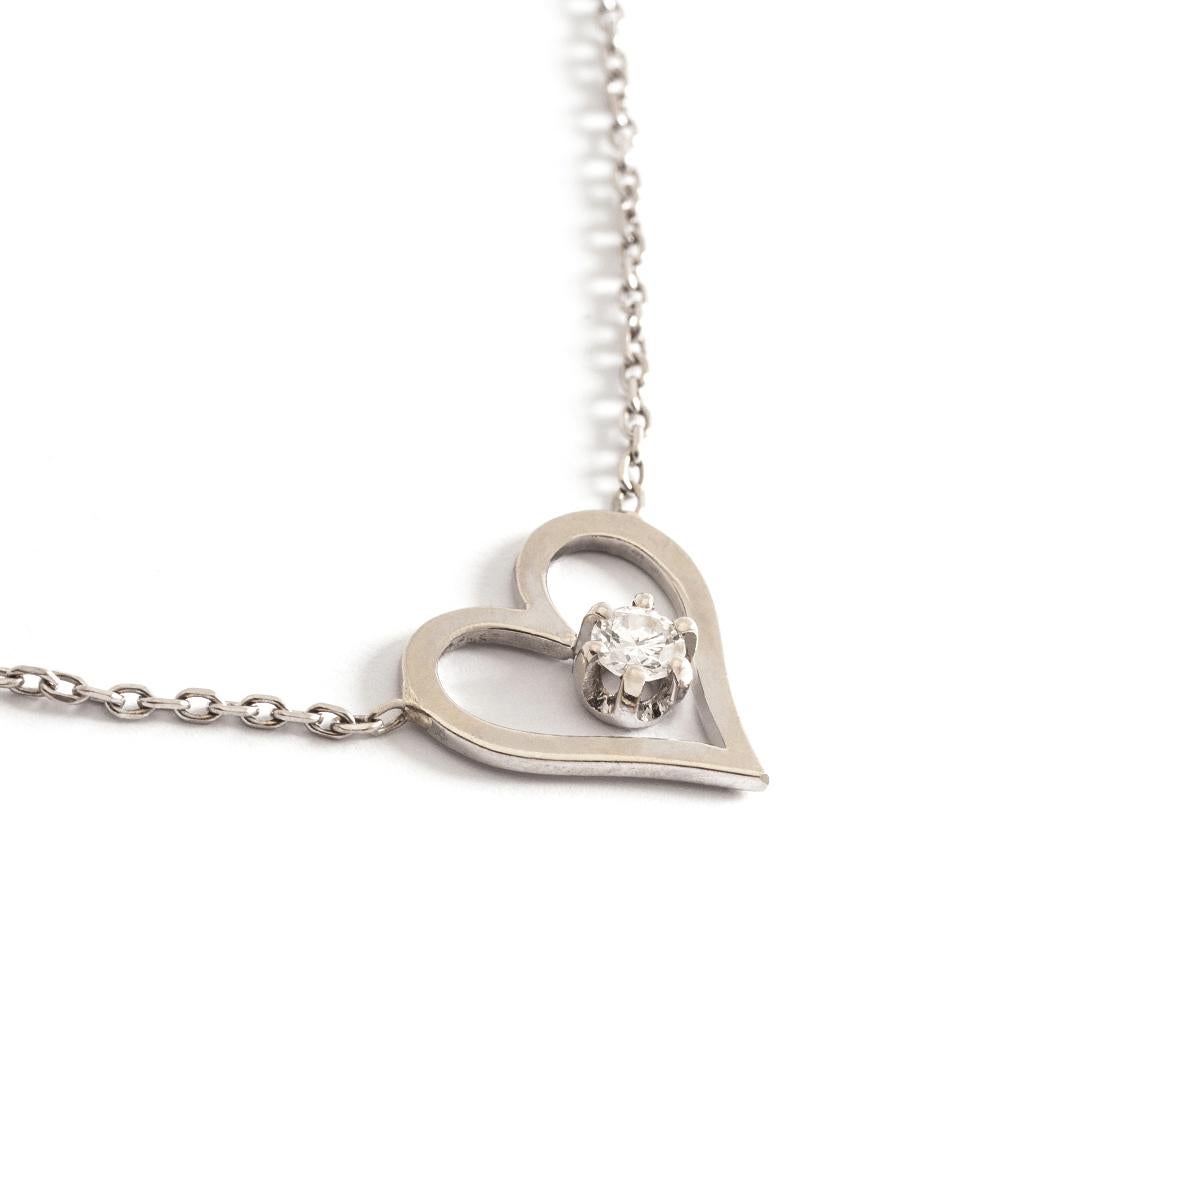 Diamond on white Gold Heart shape Pendant on chain Necklace.
Diamond estimated weight: 0.31 carat.
Pendant length: 1.34 centimeters.
Necklace length: 34.00 centimeters.